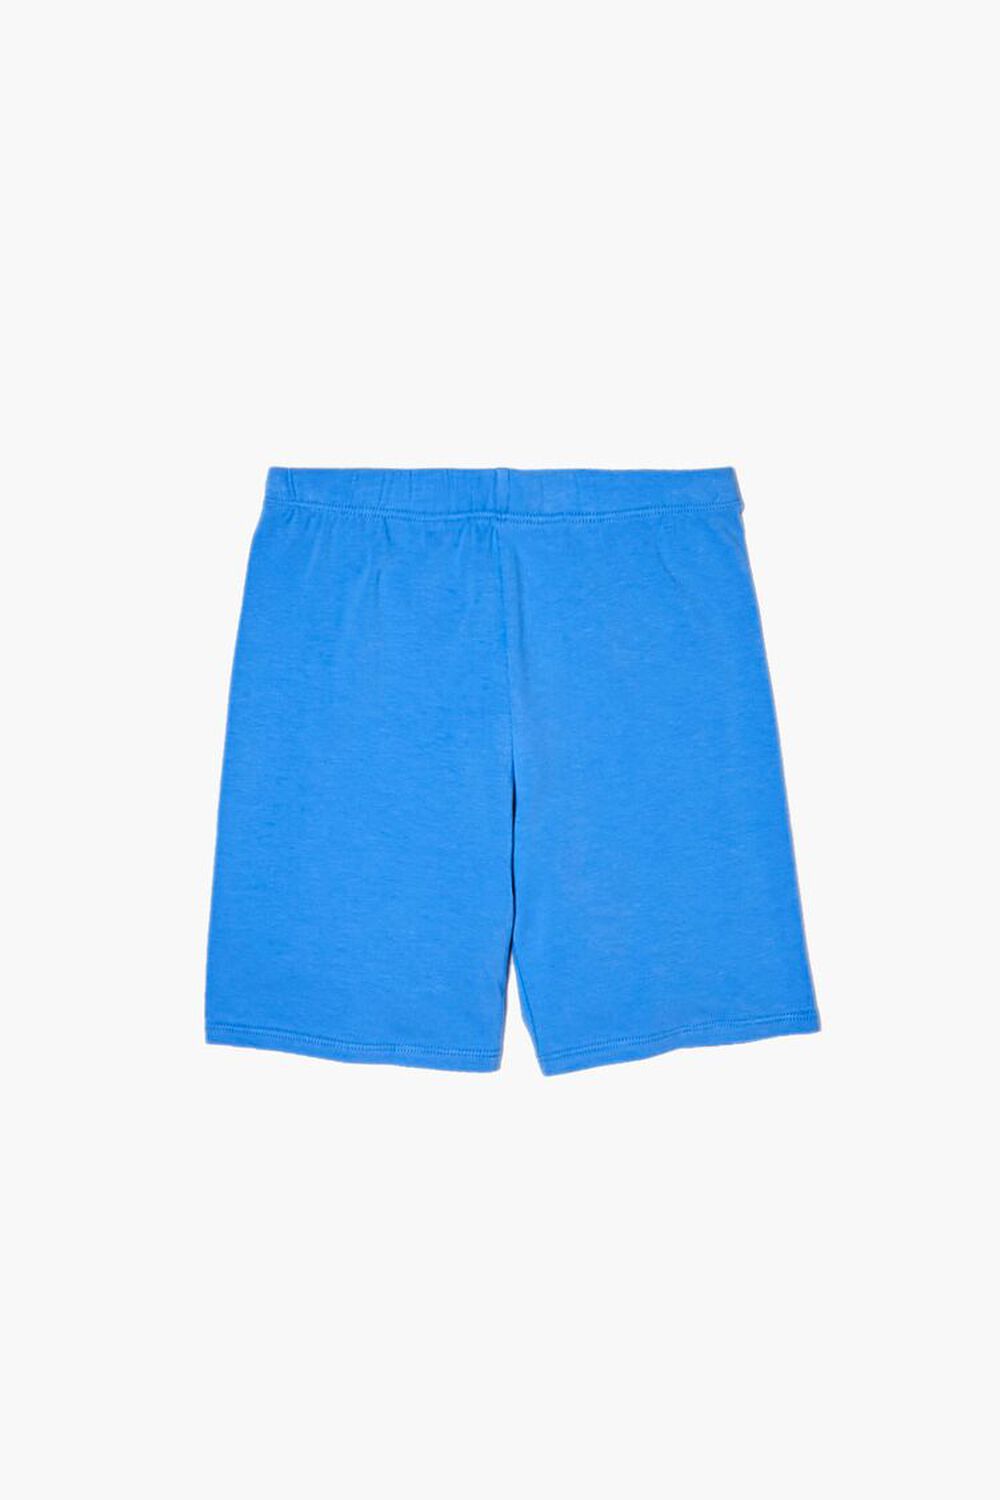 BLUE Girls Organically Grown Cotton Biker Shorts (Kids), image 1